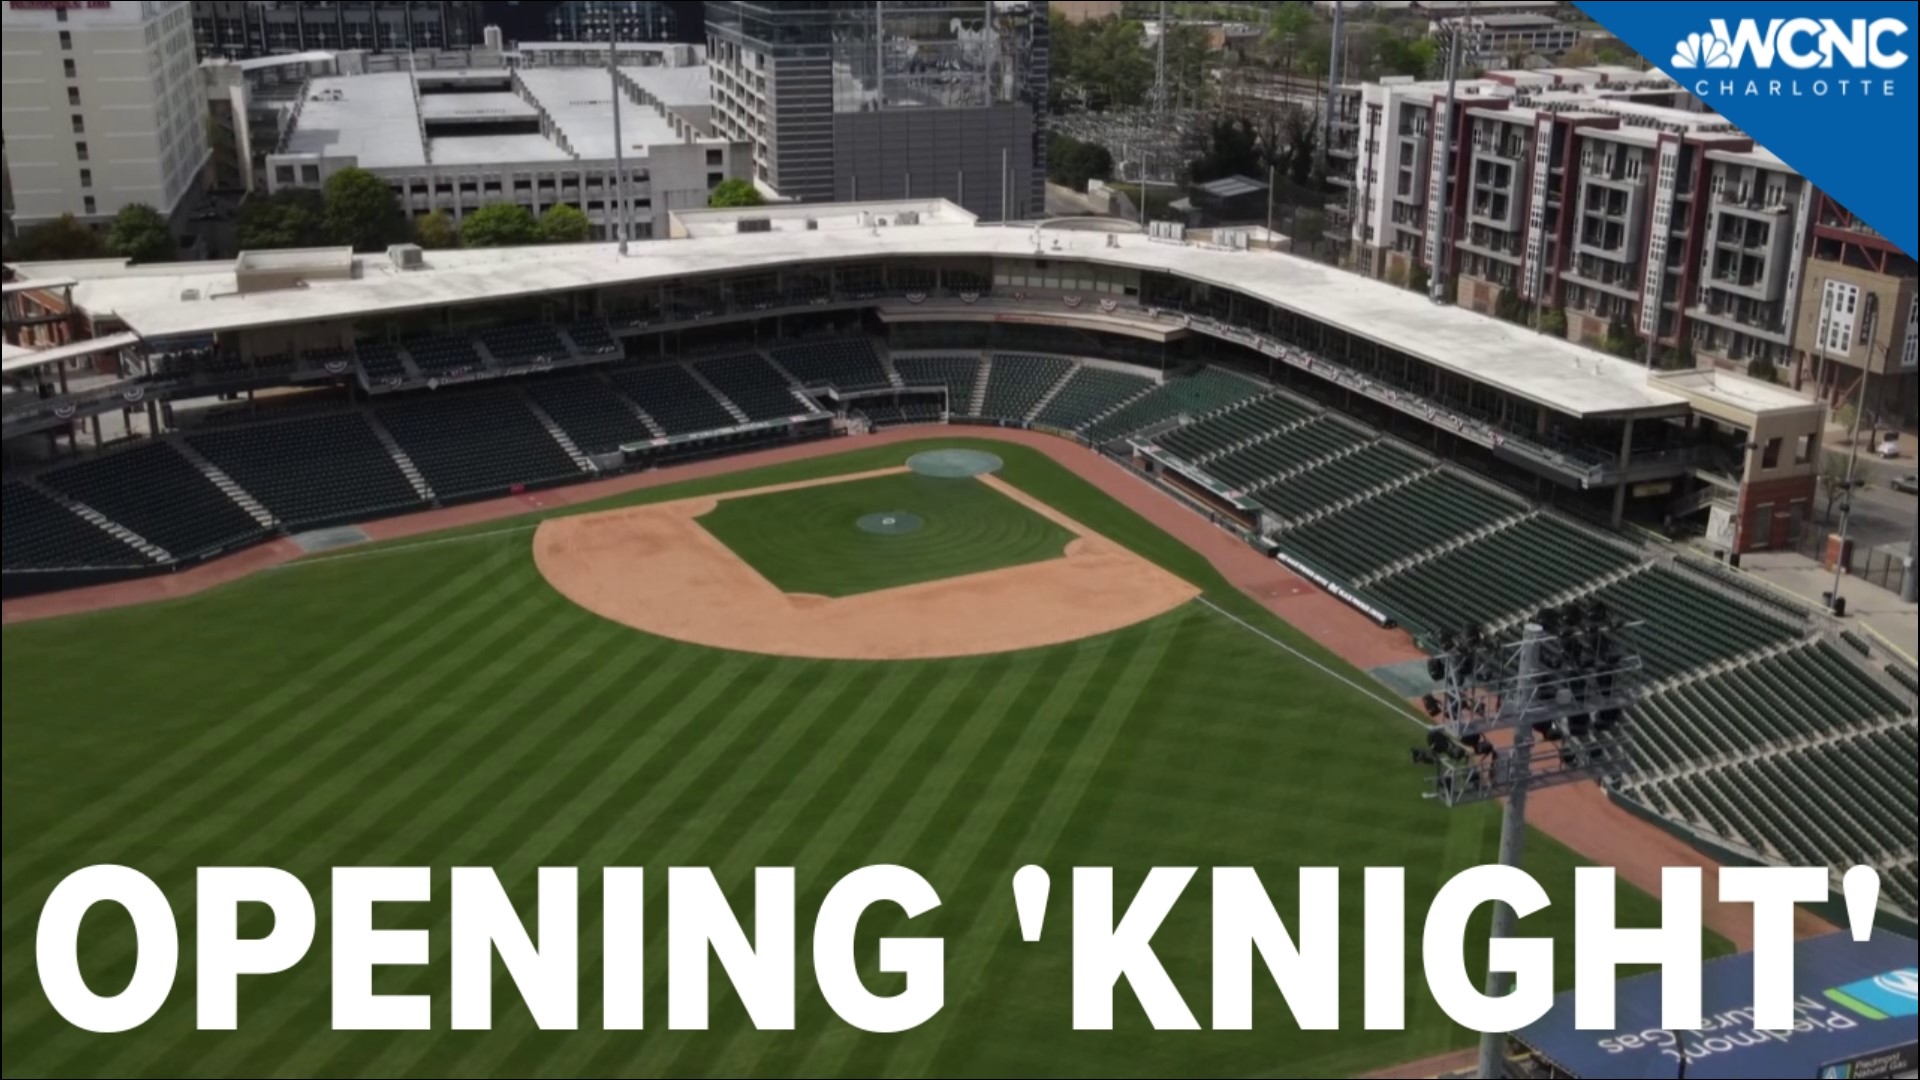 Charlotte Knights host Opening 'Knight' on Friday